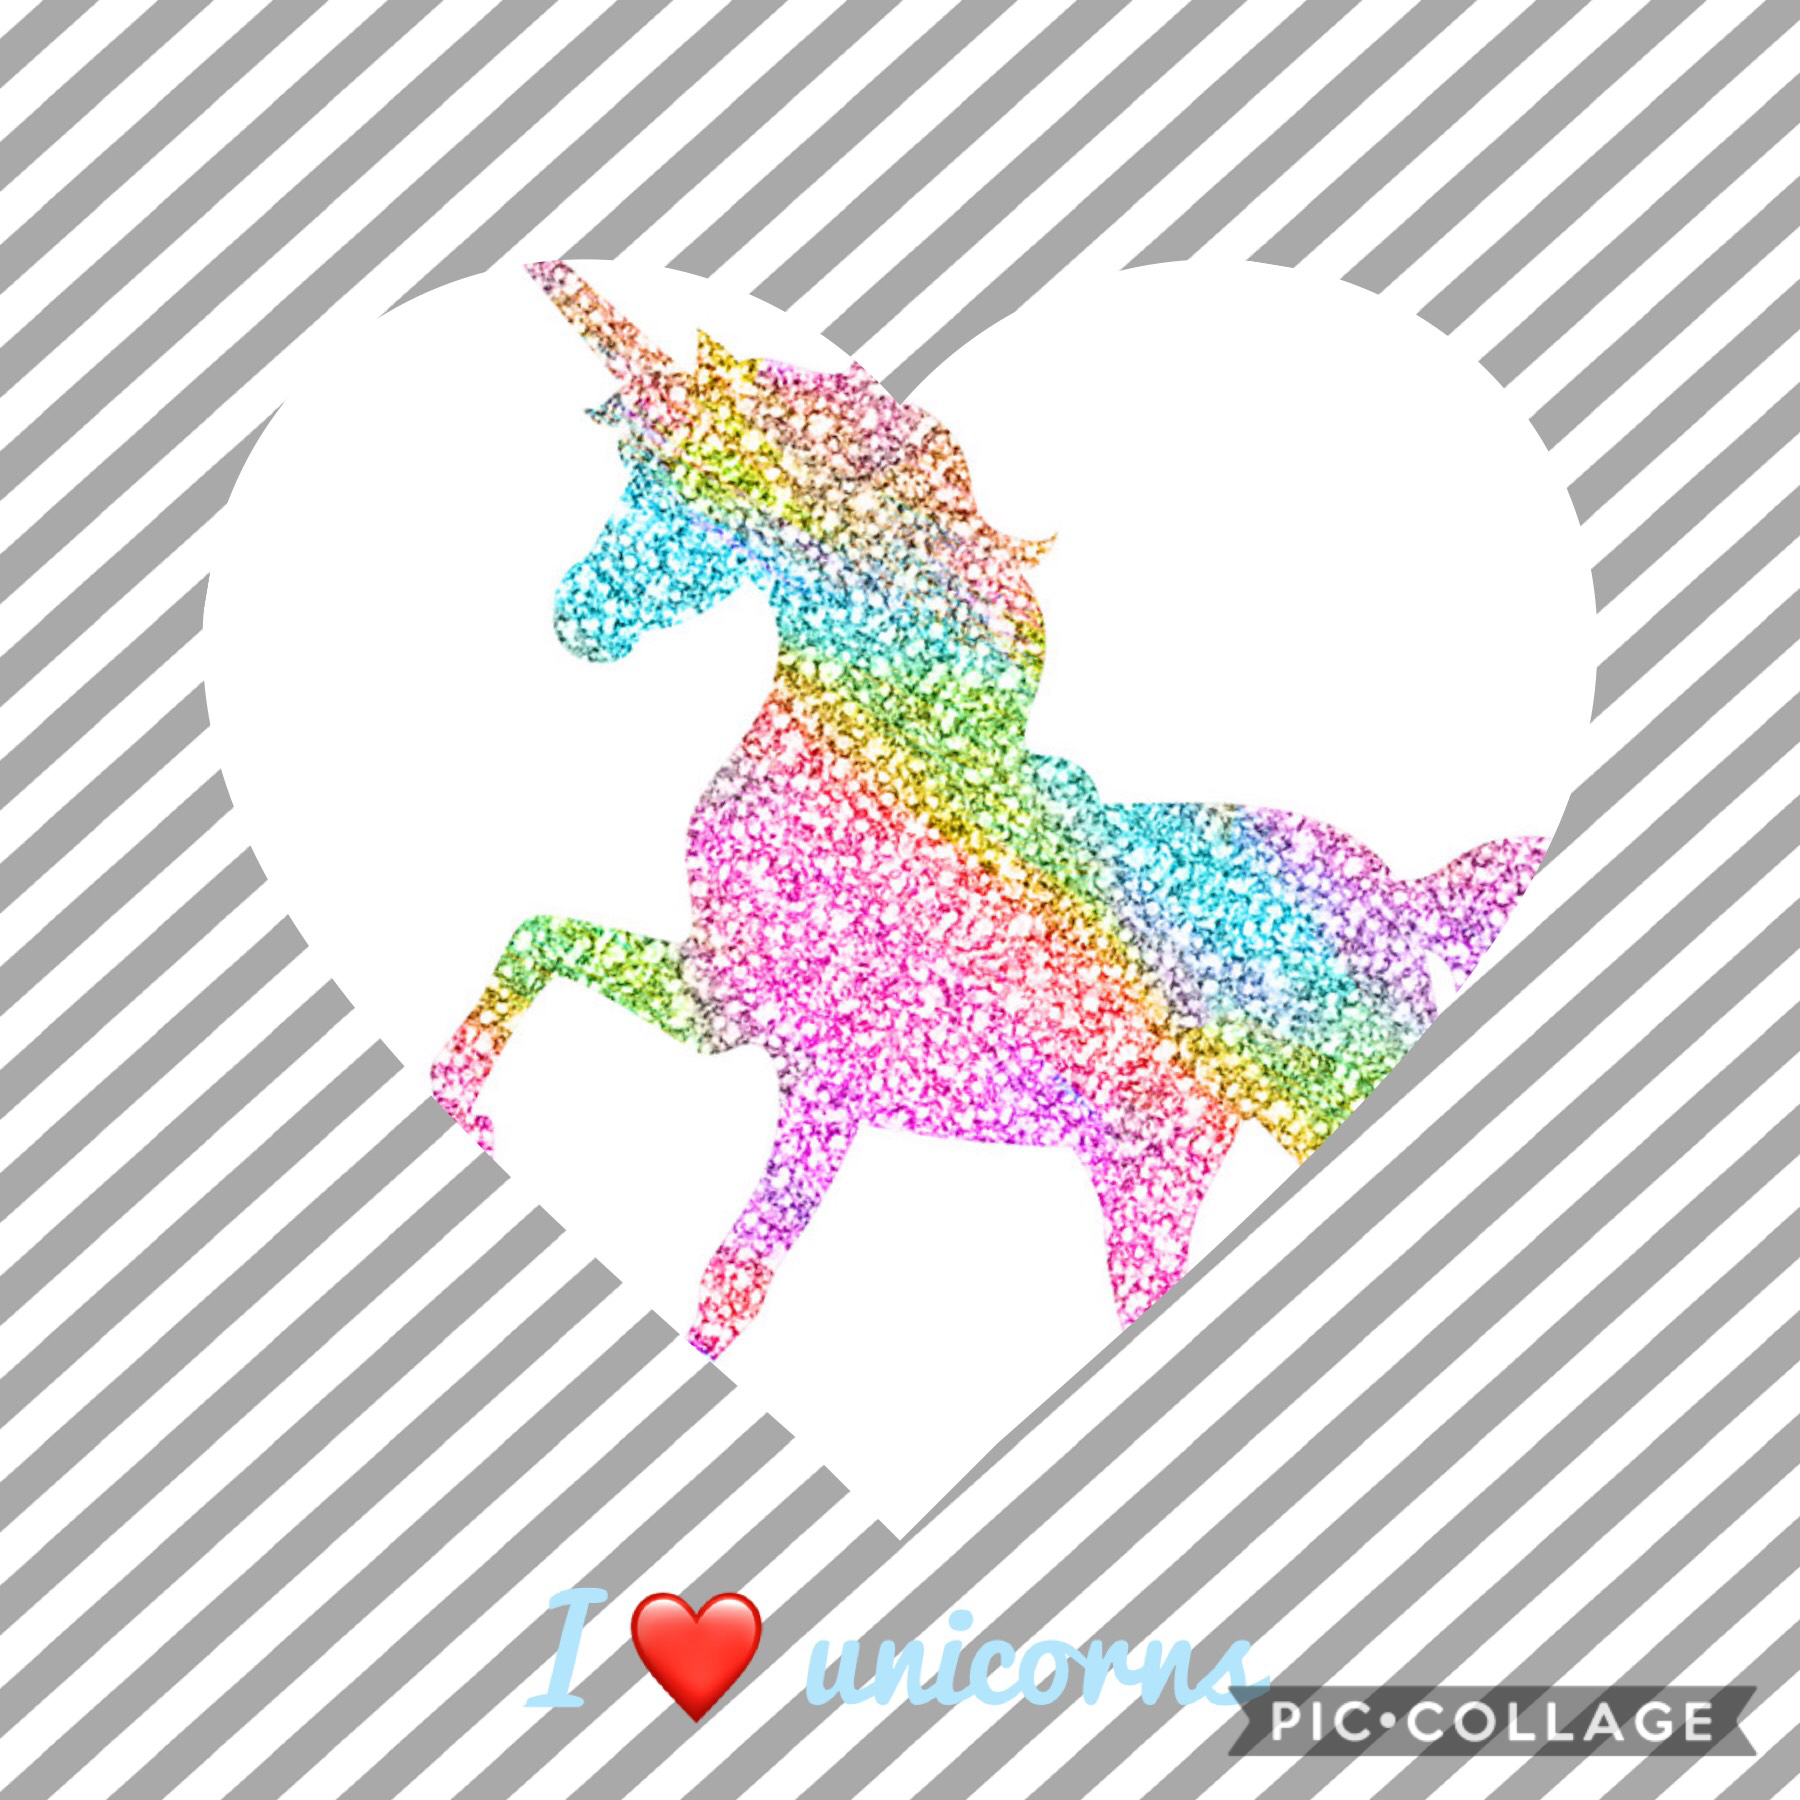 I love unicorns